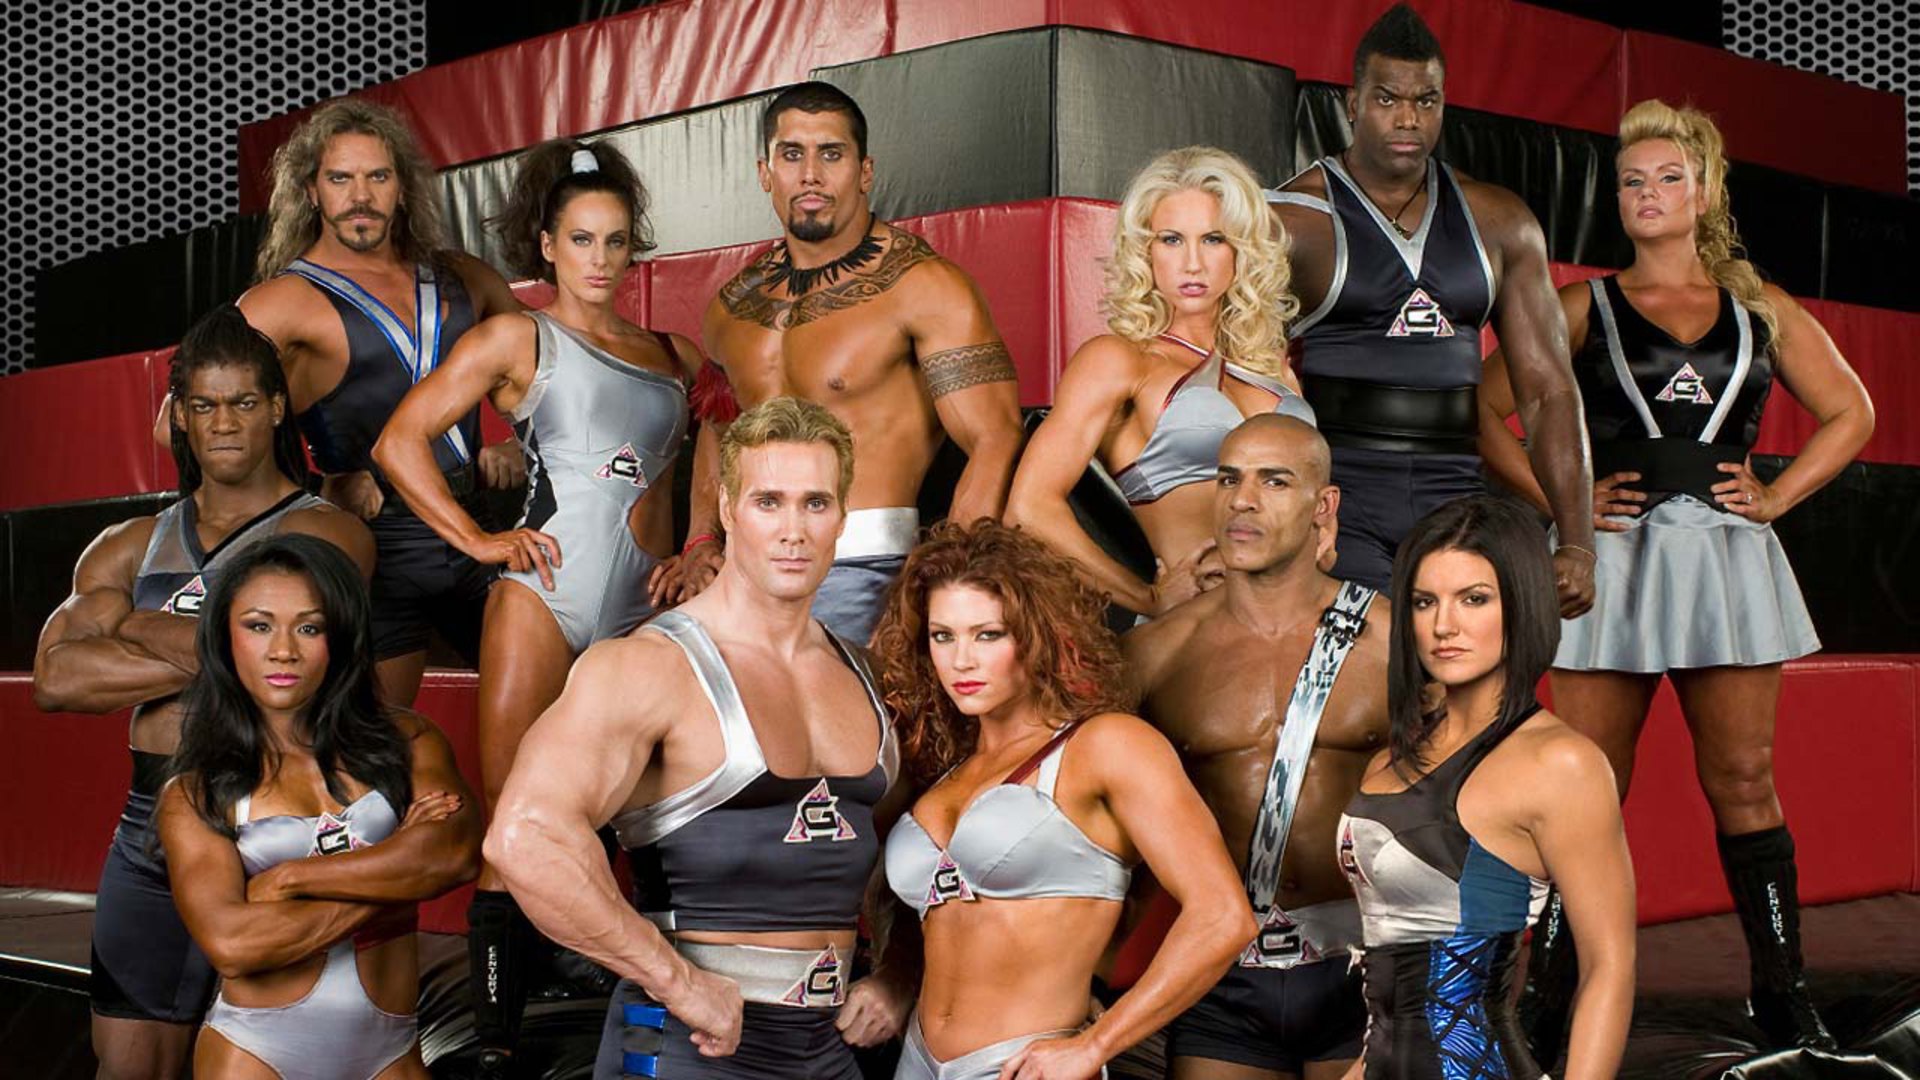 American Gladiators (TV Series 2008)